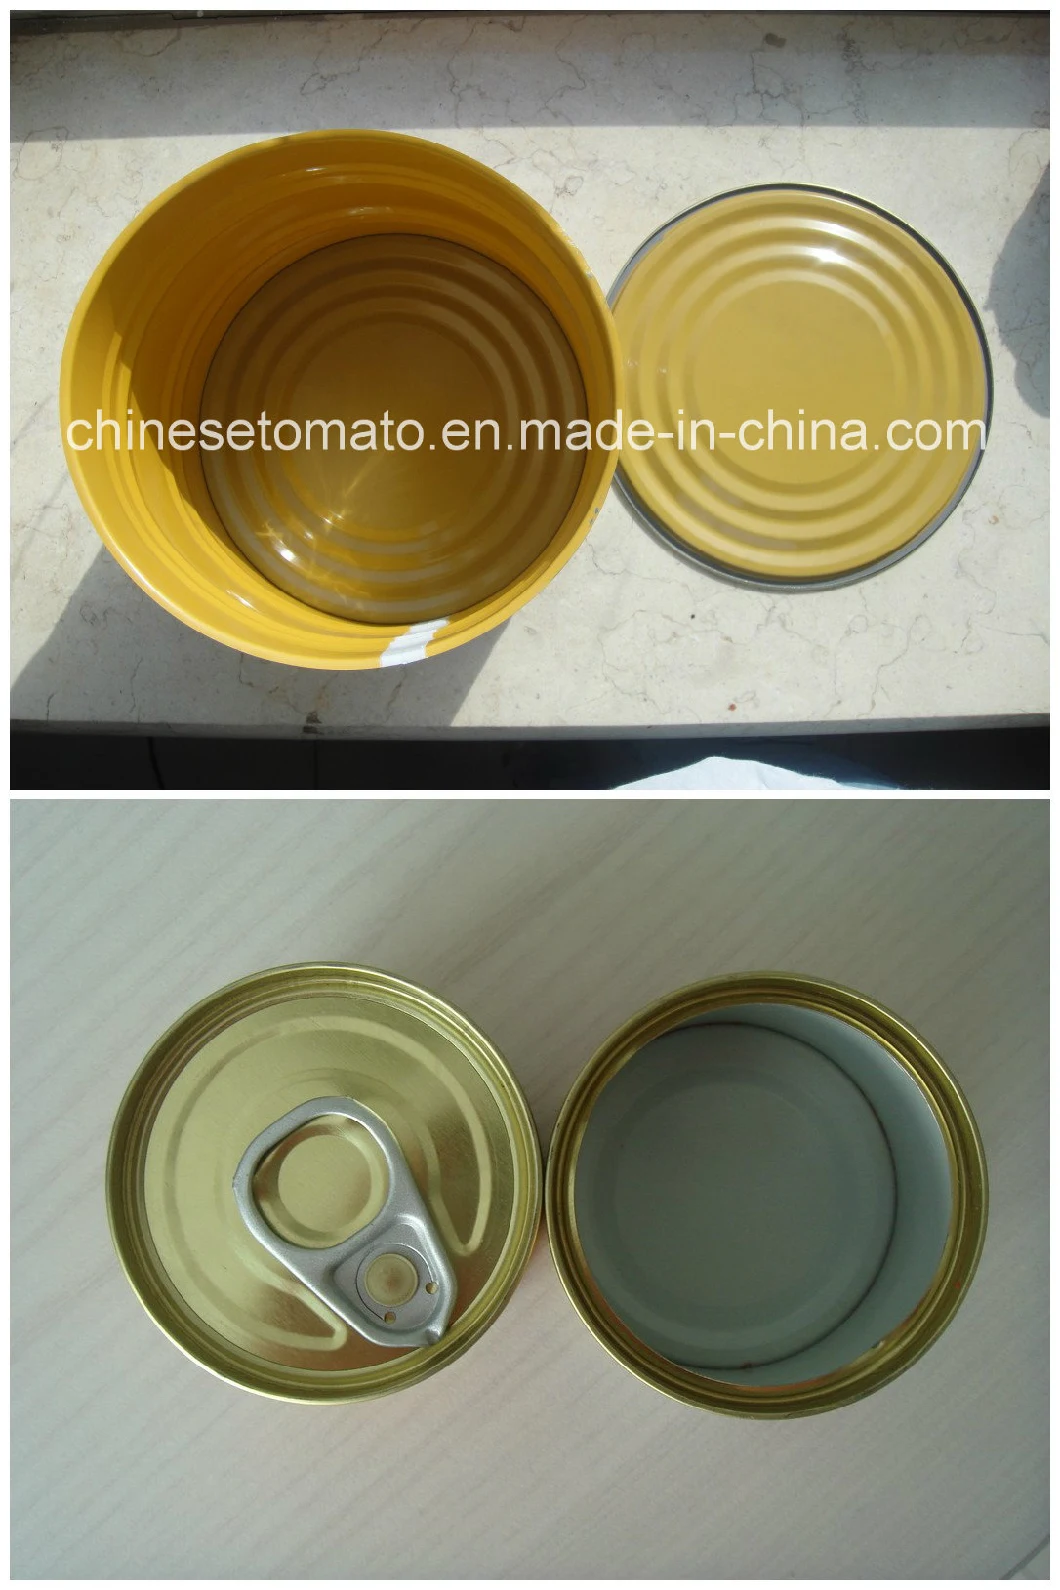 Tin Tomato Paste with Yellow Coating Inside